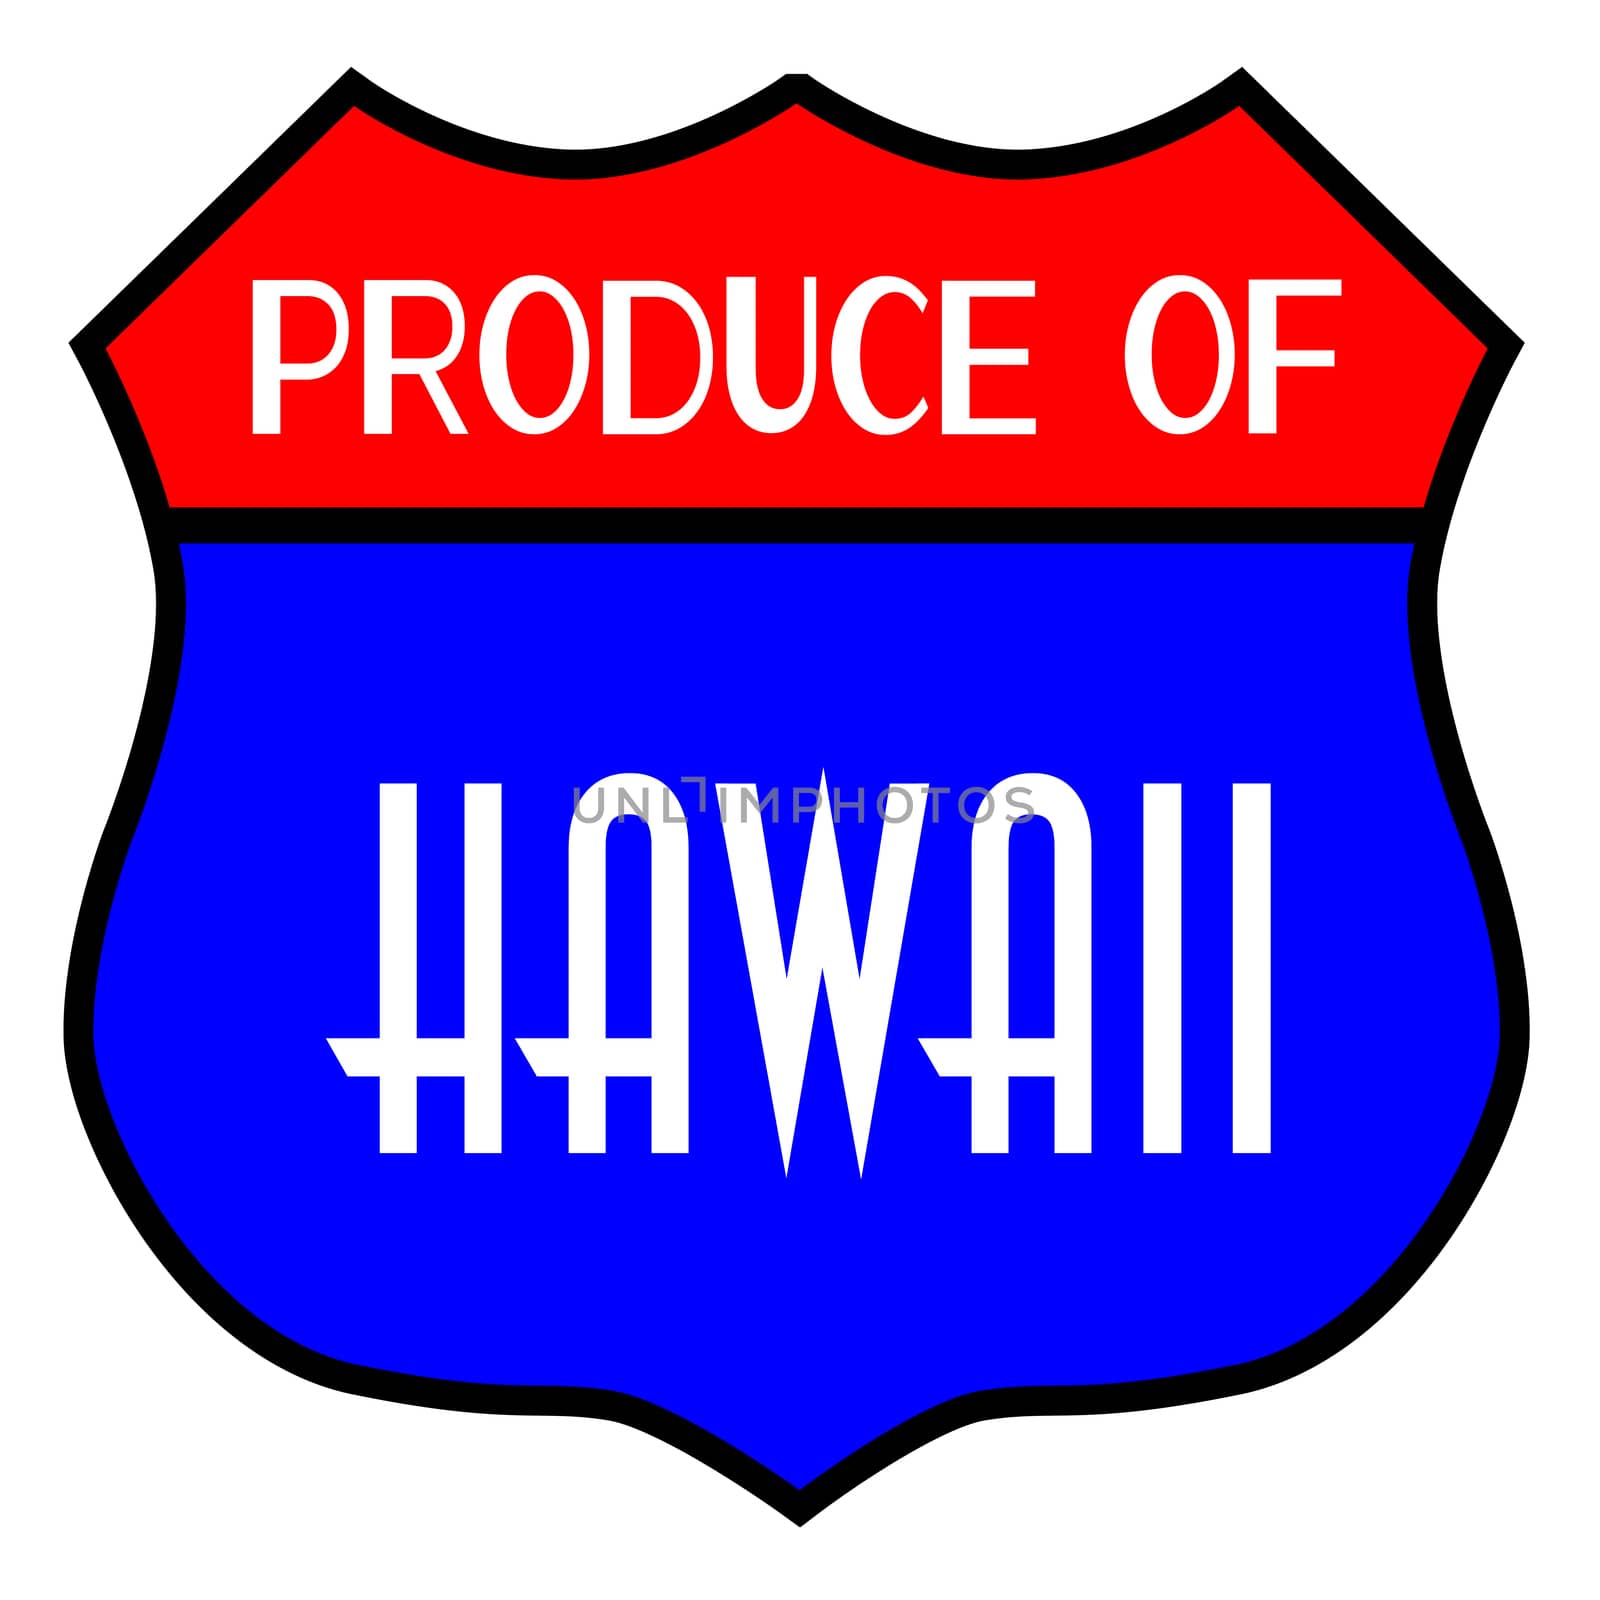 Produce Of Hawaii by Bigalbaloo